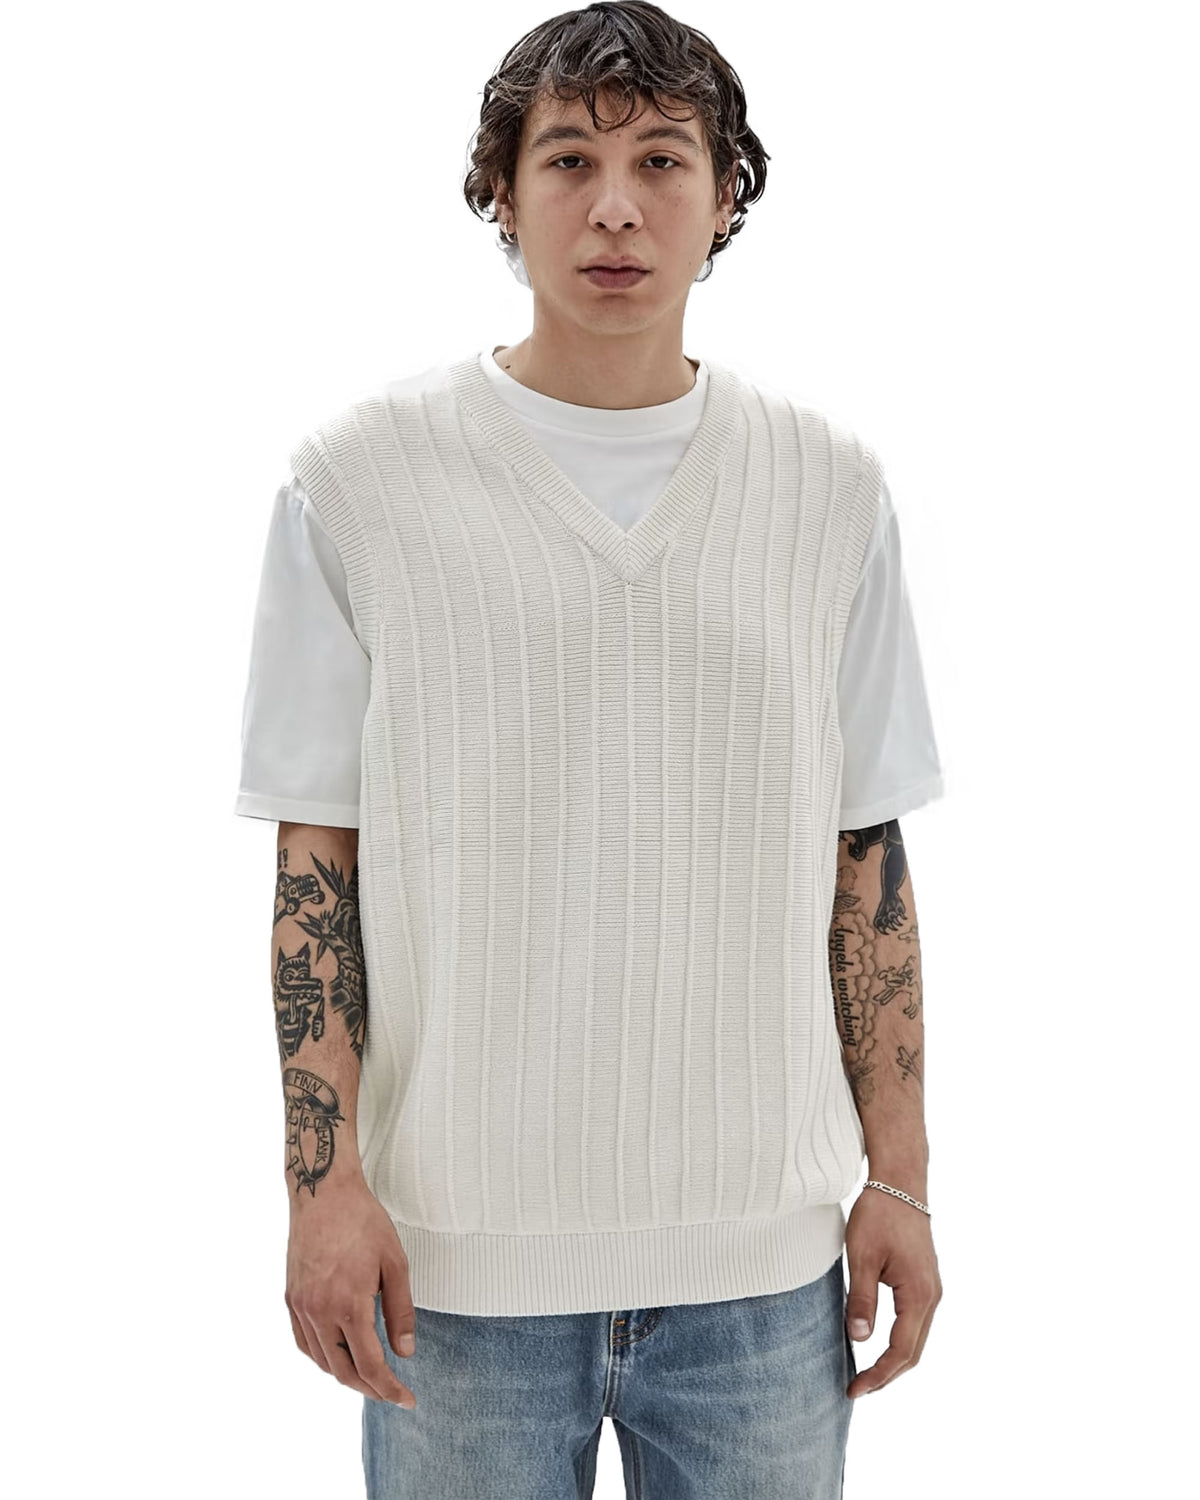 Guess Originals Jaxon Sweater Vest Off White